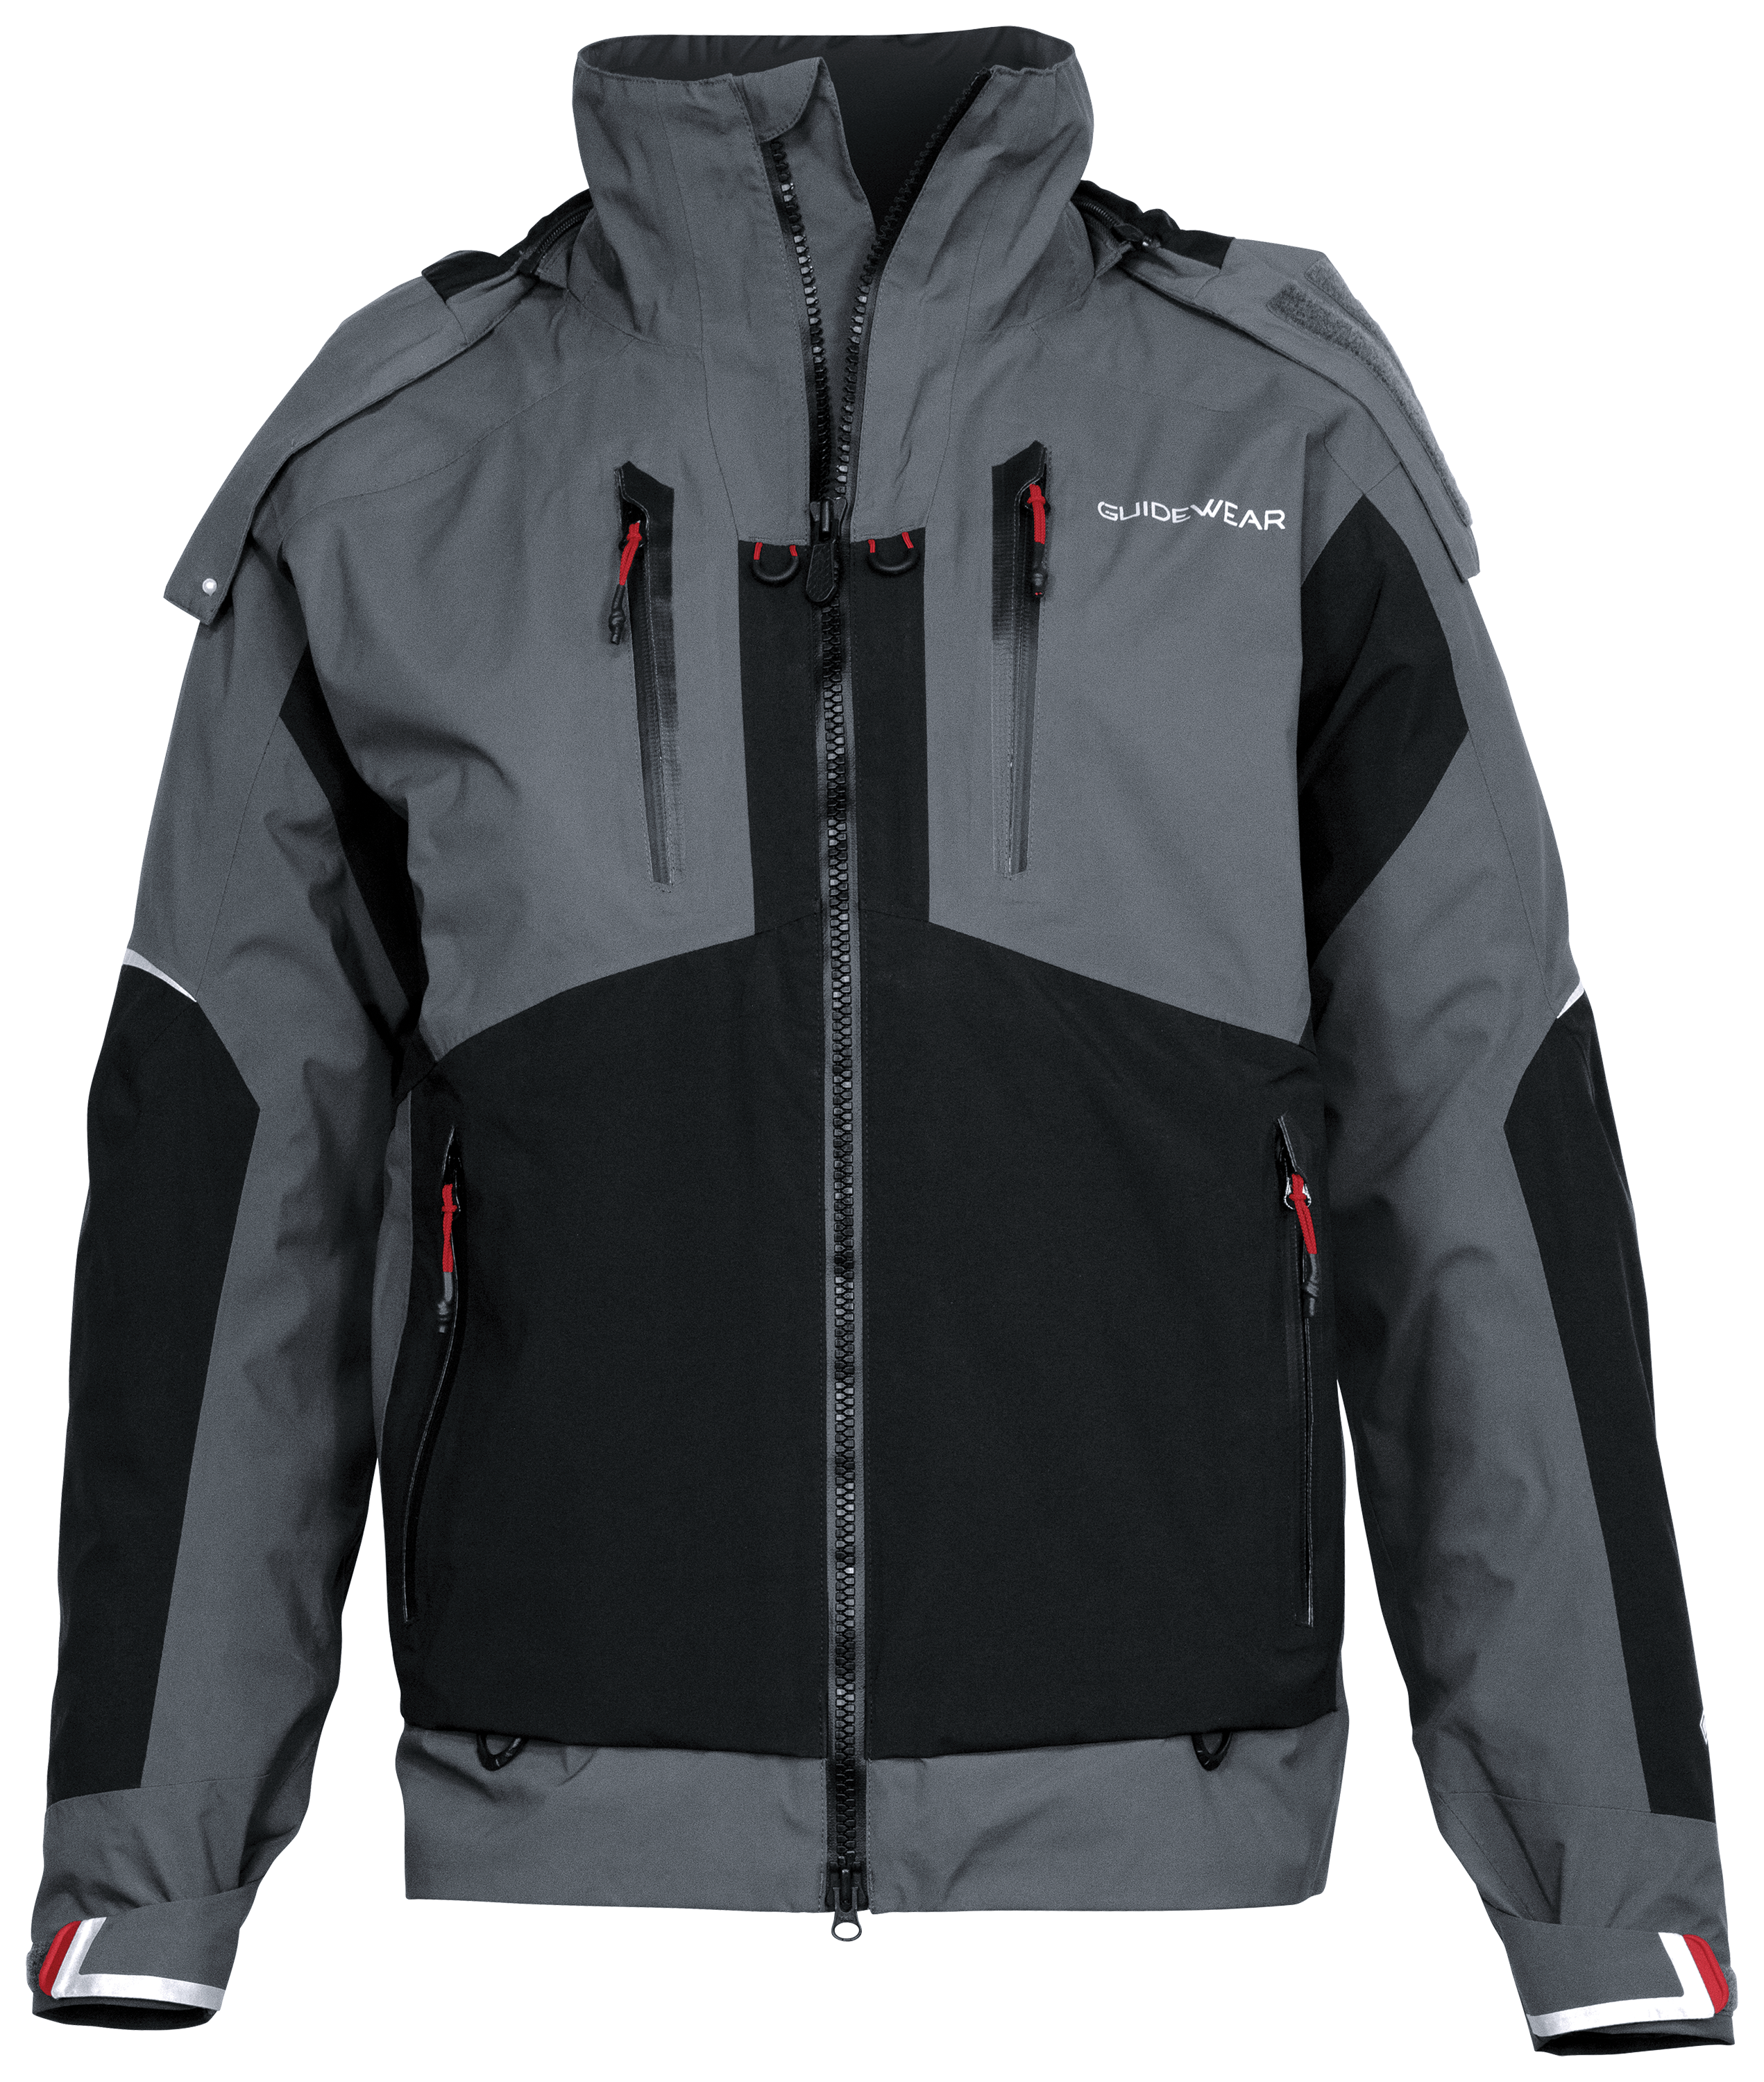 Johnny Morris Bass Pro Shops Guidewear Elite Jacket for Men - Winter Moss - XLT